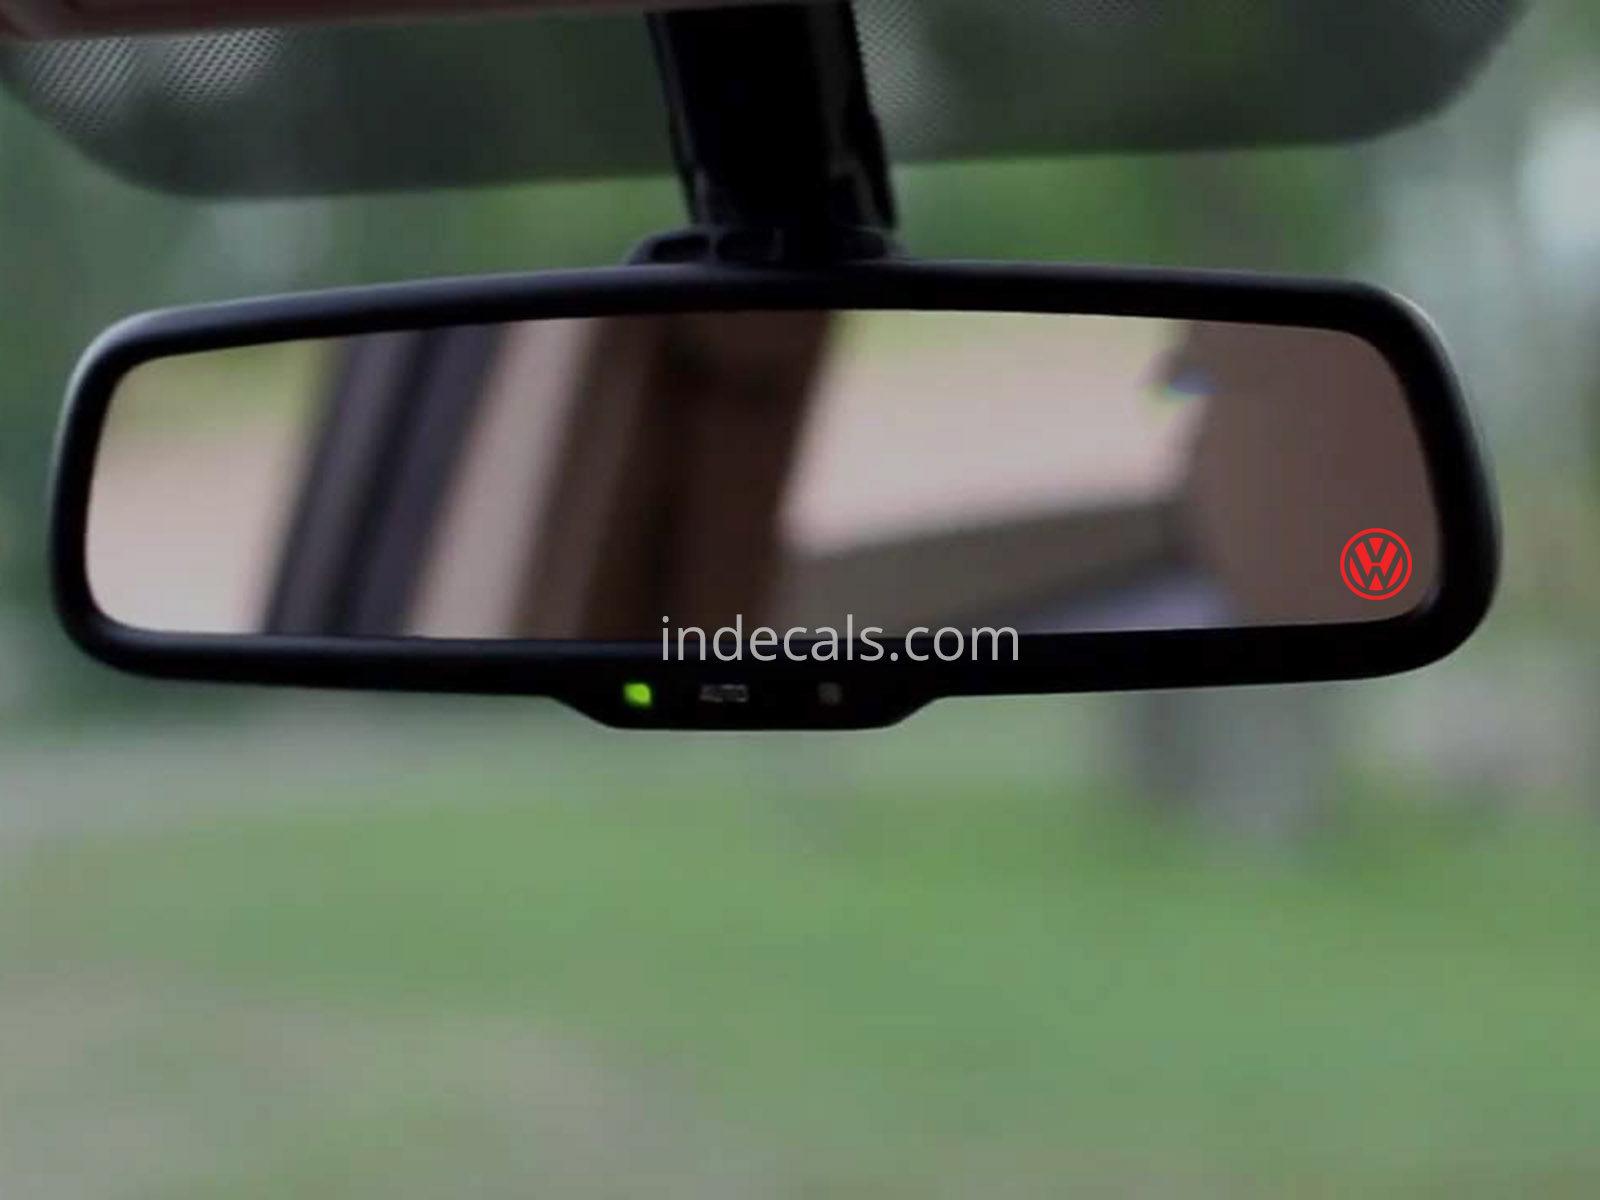 3 x Volkswagen Stickers for Interior Mirror - Red